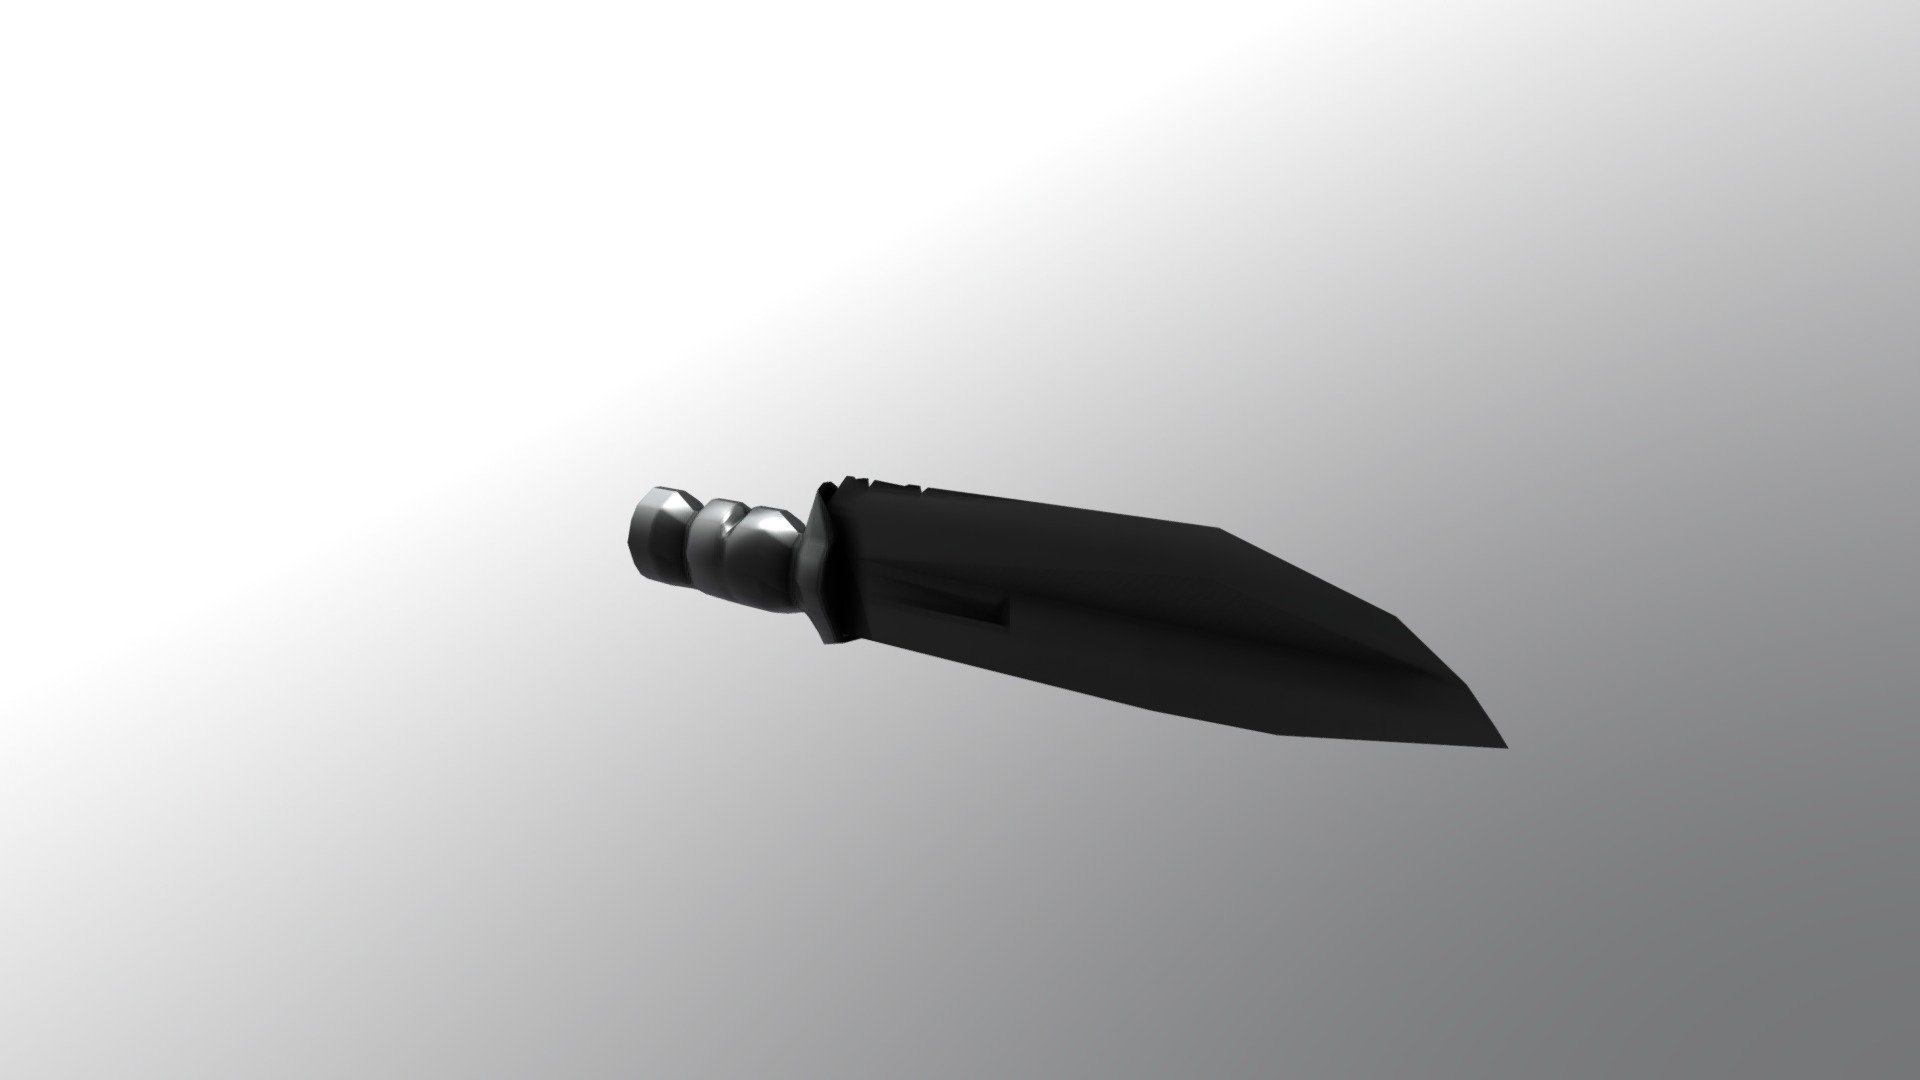 Black tactical knife